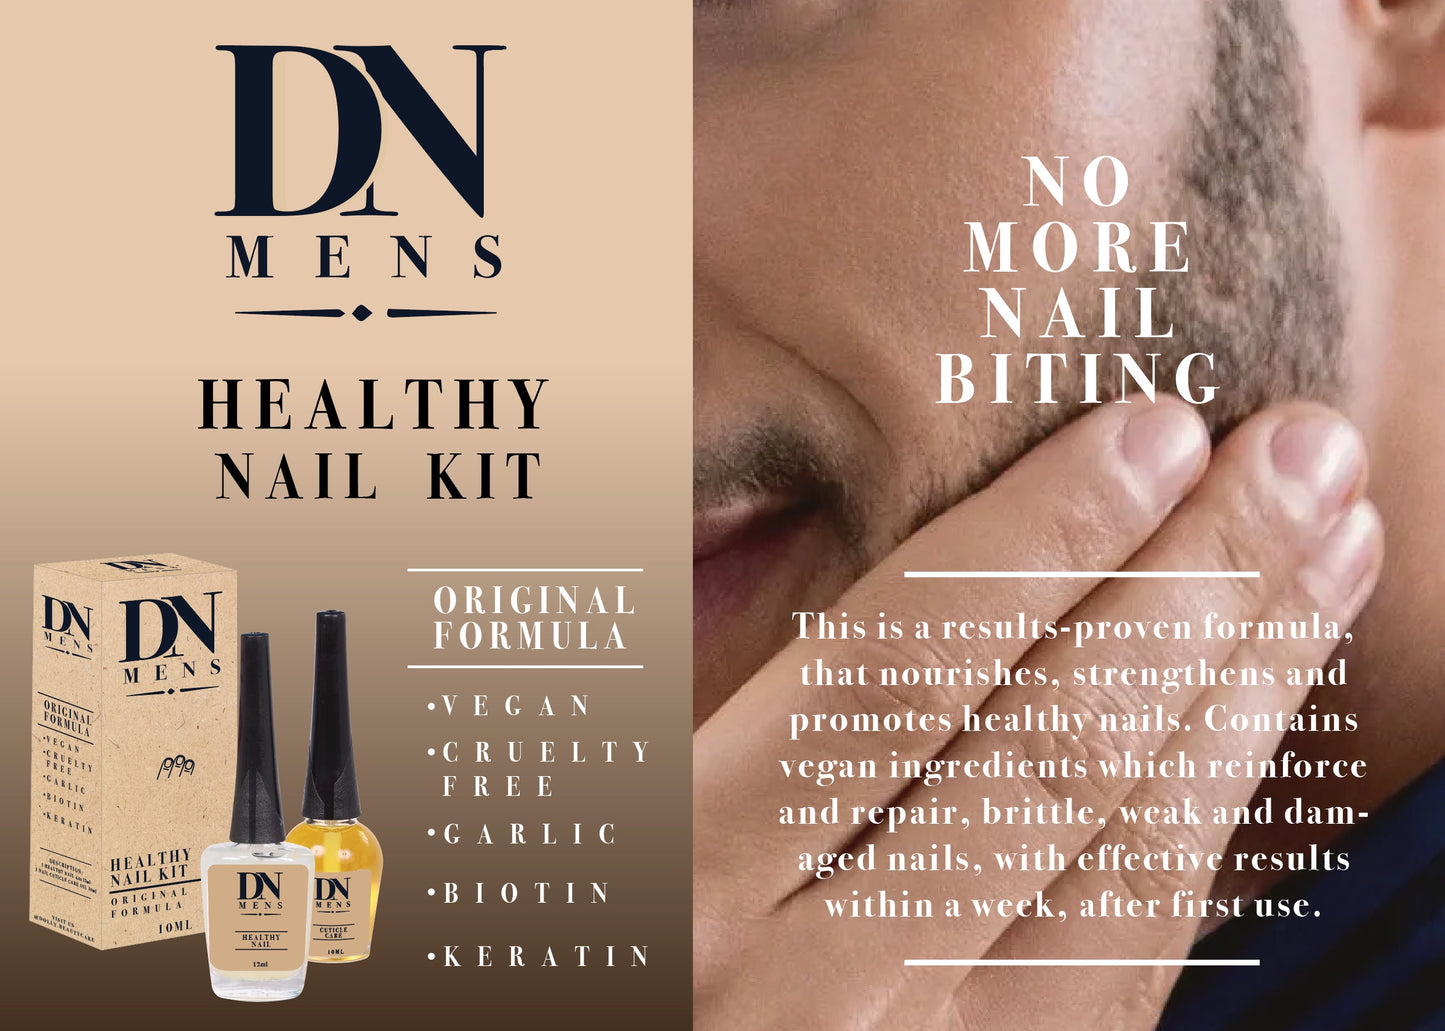 Healthy Nail kit for Men